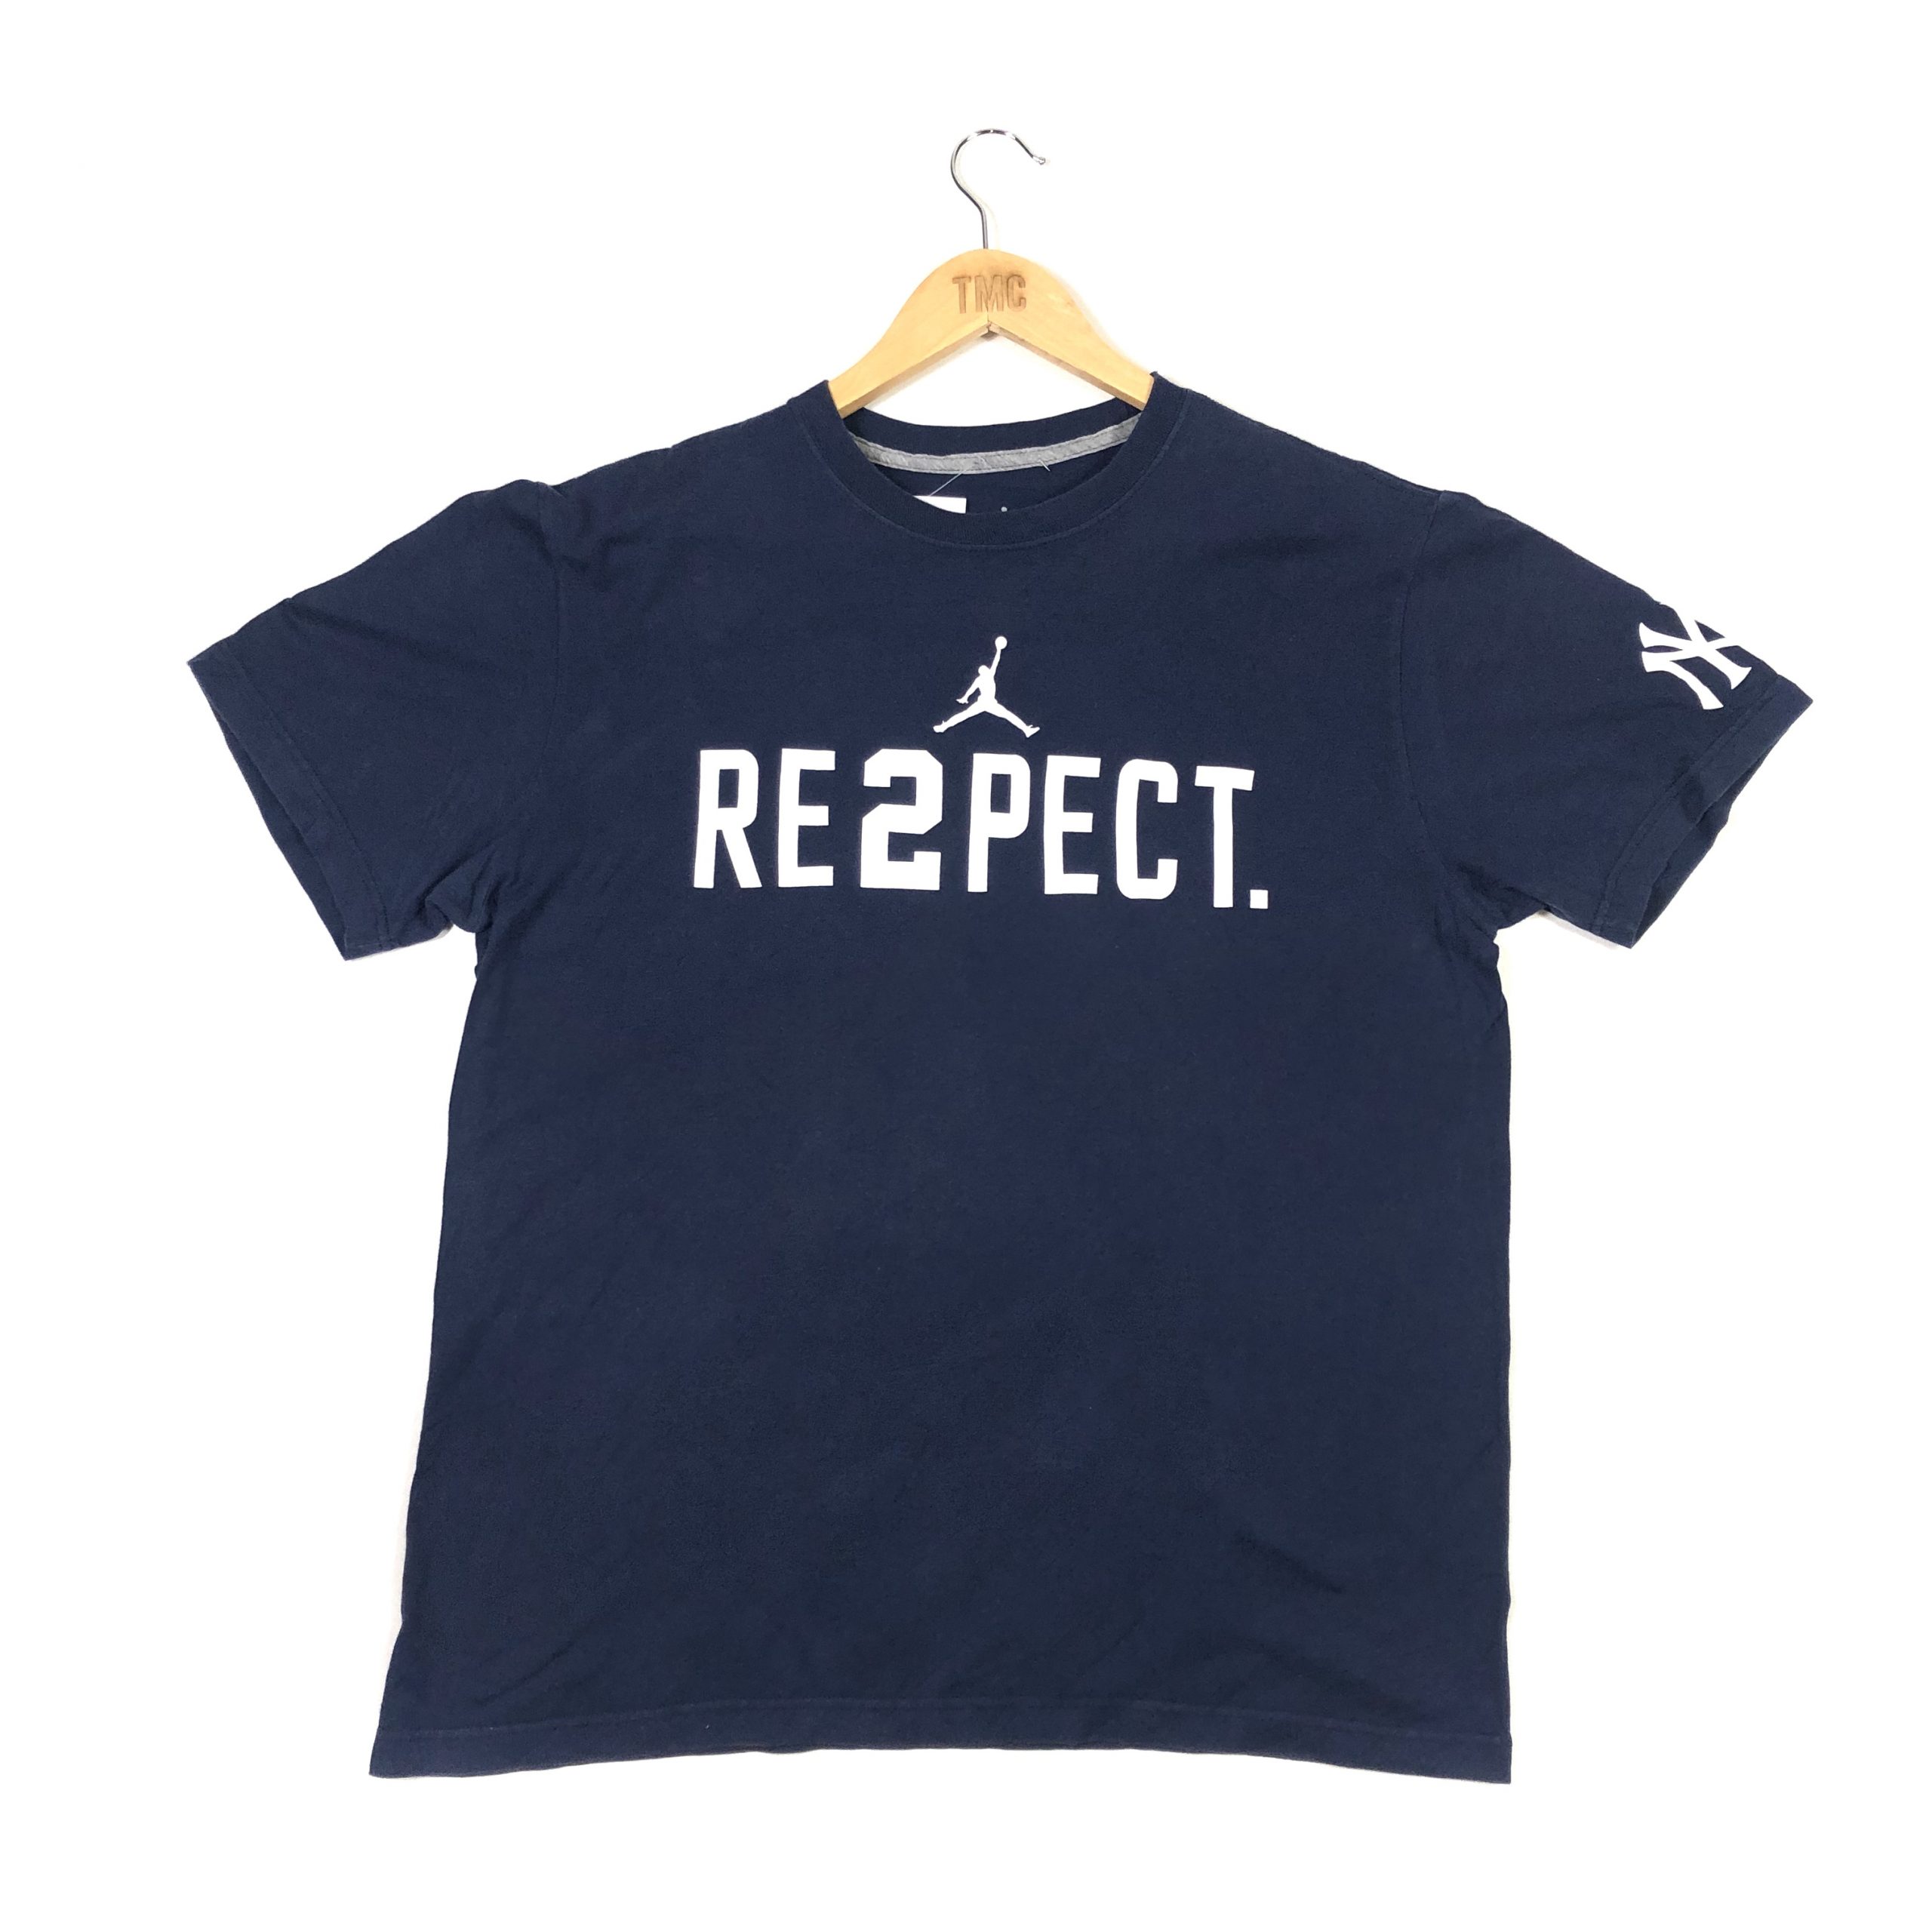 Nike Jordan 'Respect' T-Shirt - Navy - L - TMC Vintage